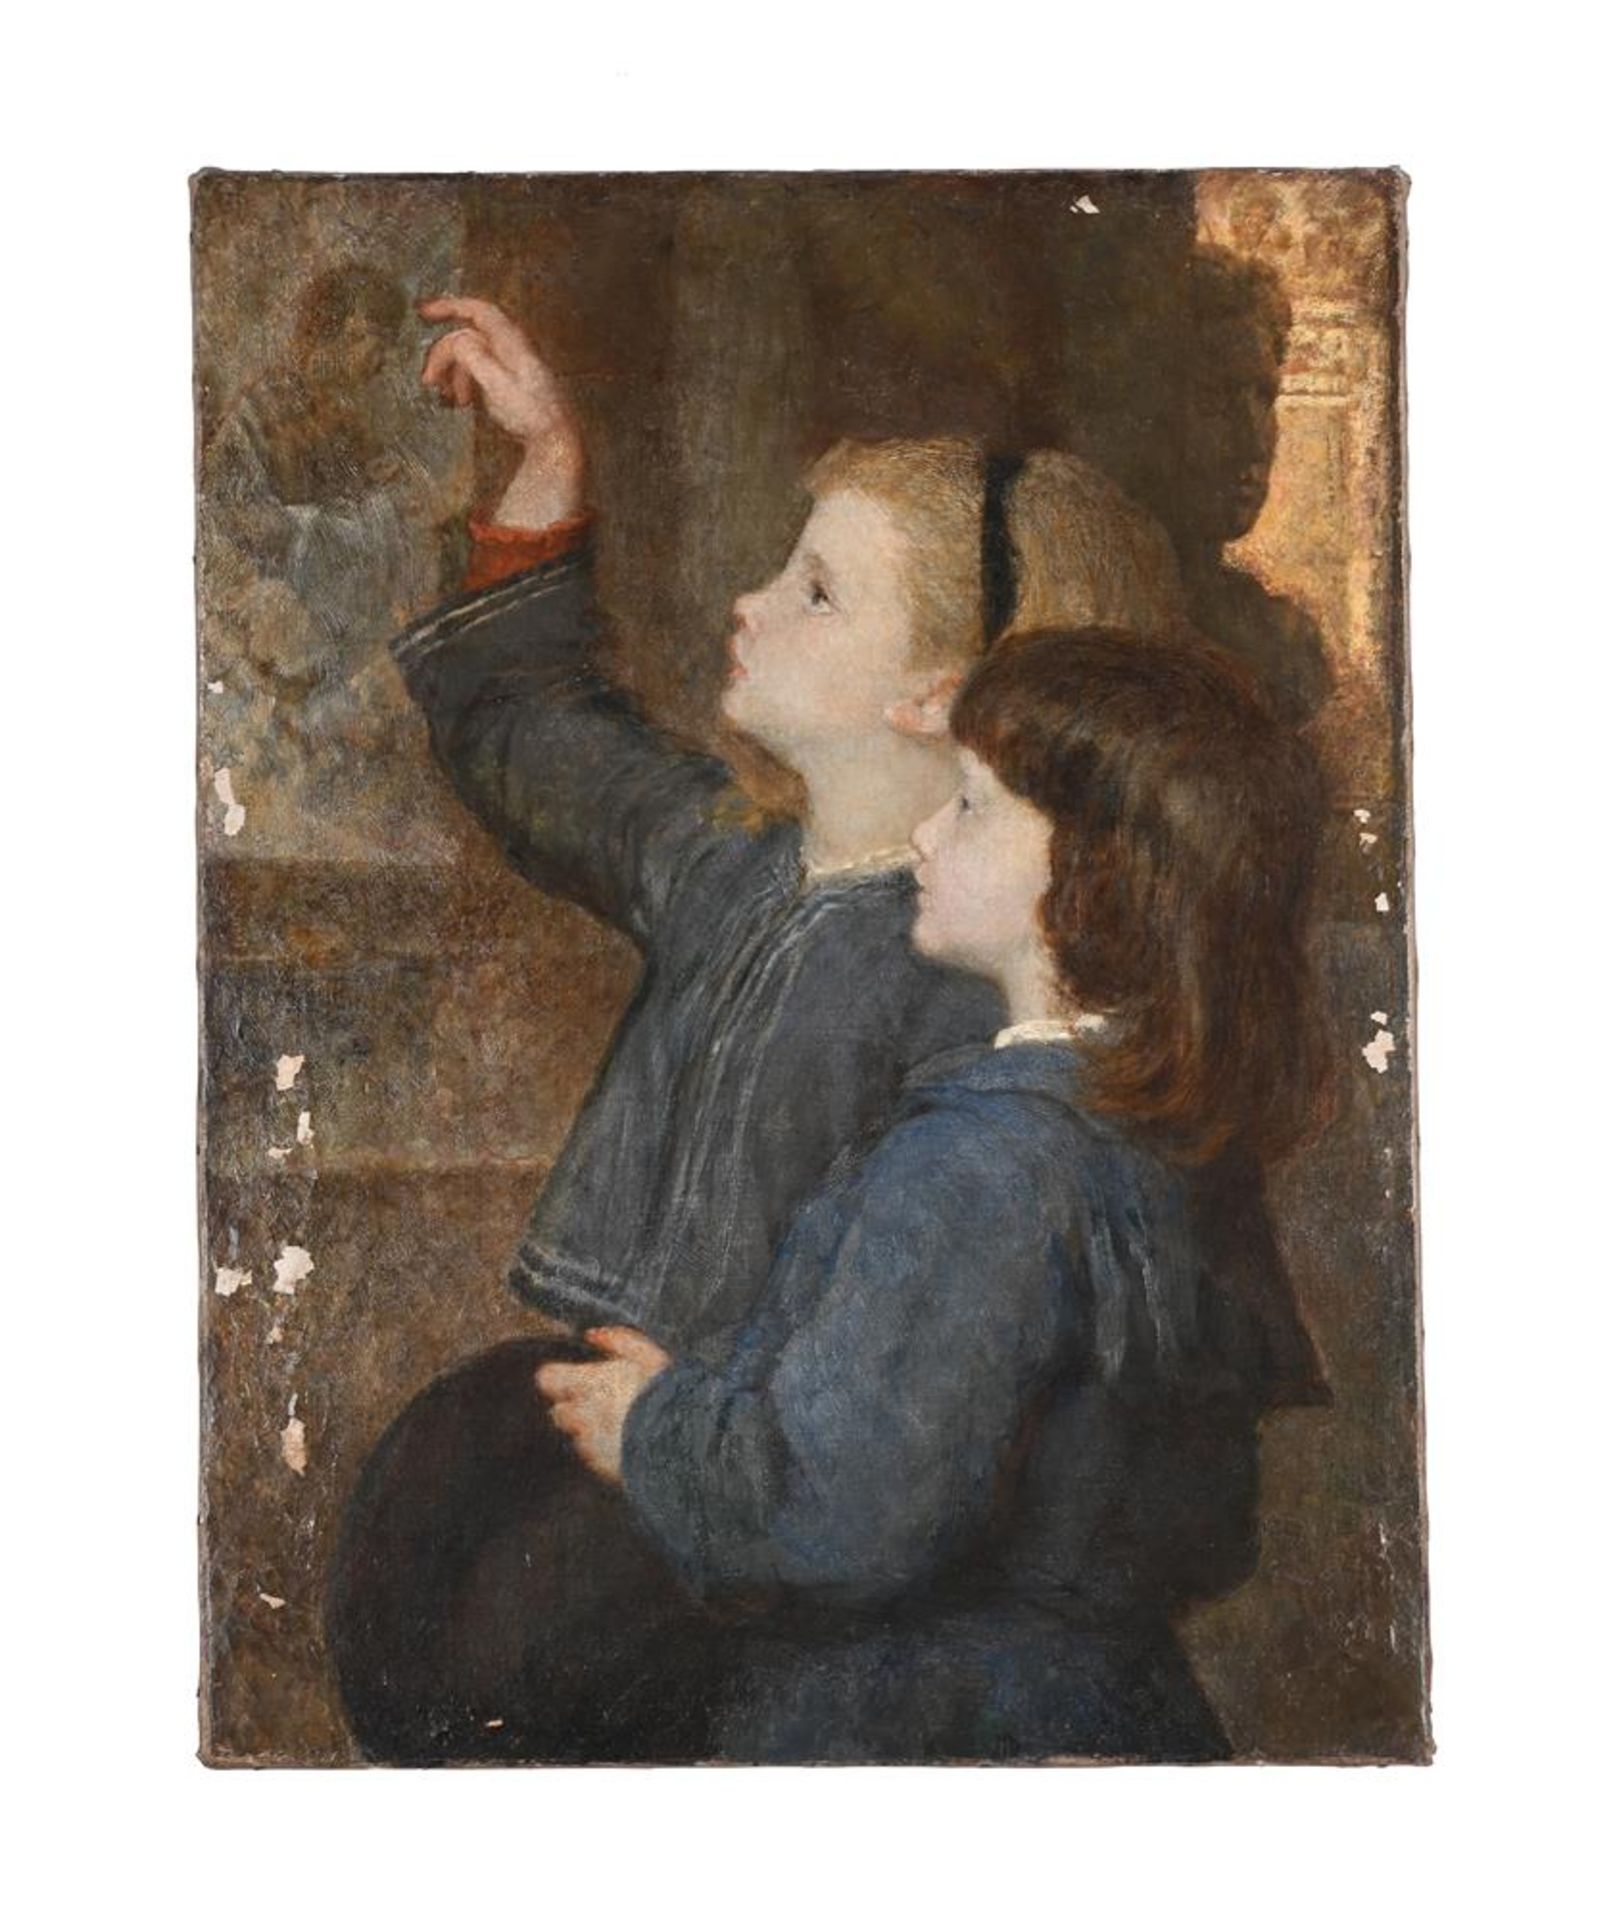 CIRCLE OF EDWIN THOMAS ROBERTS (BRITISH 1840-1917), CHILDREN IN AN ART GALLERY